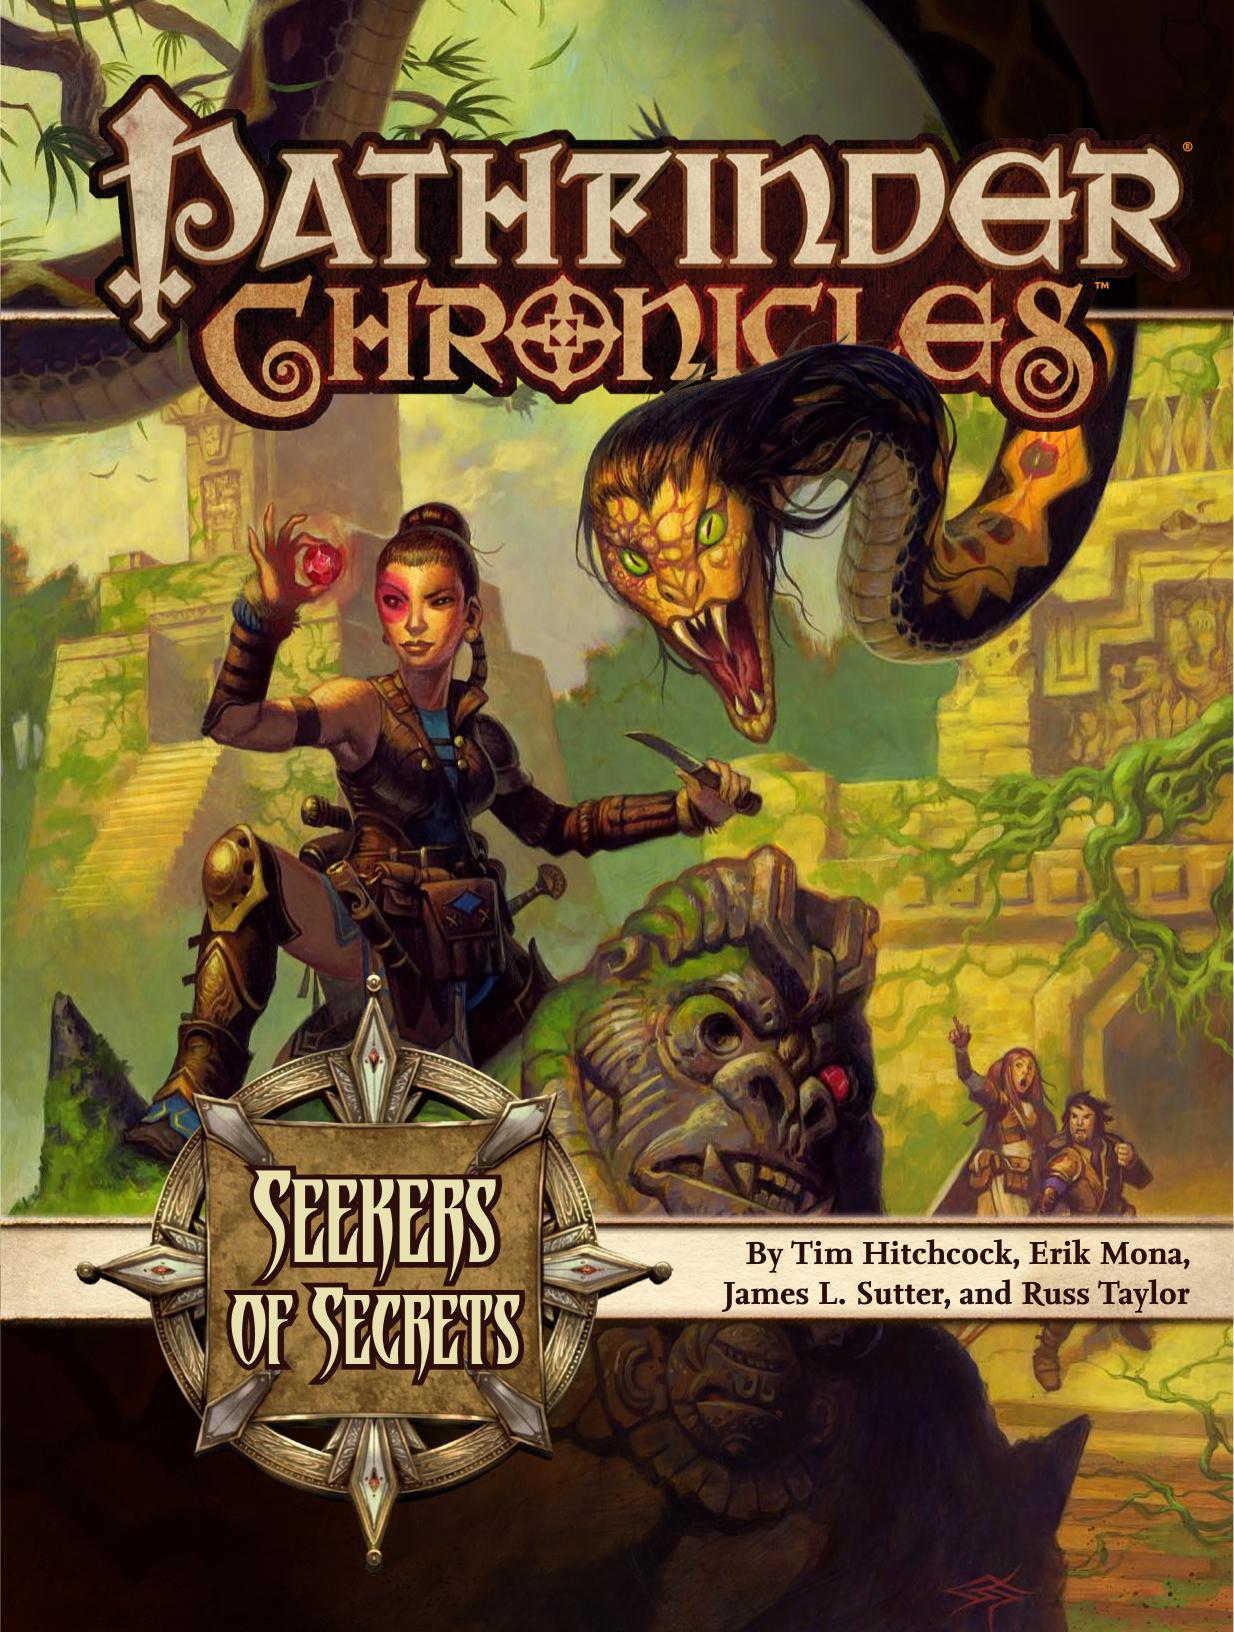 Pathfinder Chronicles: Seekers of Secrets